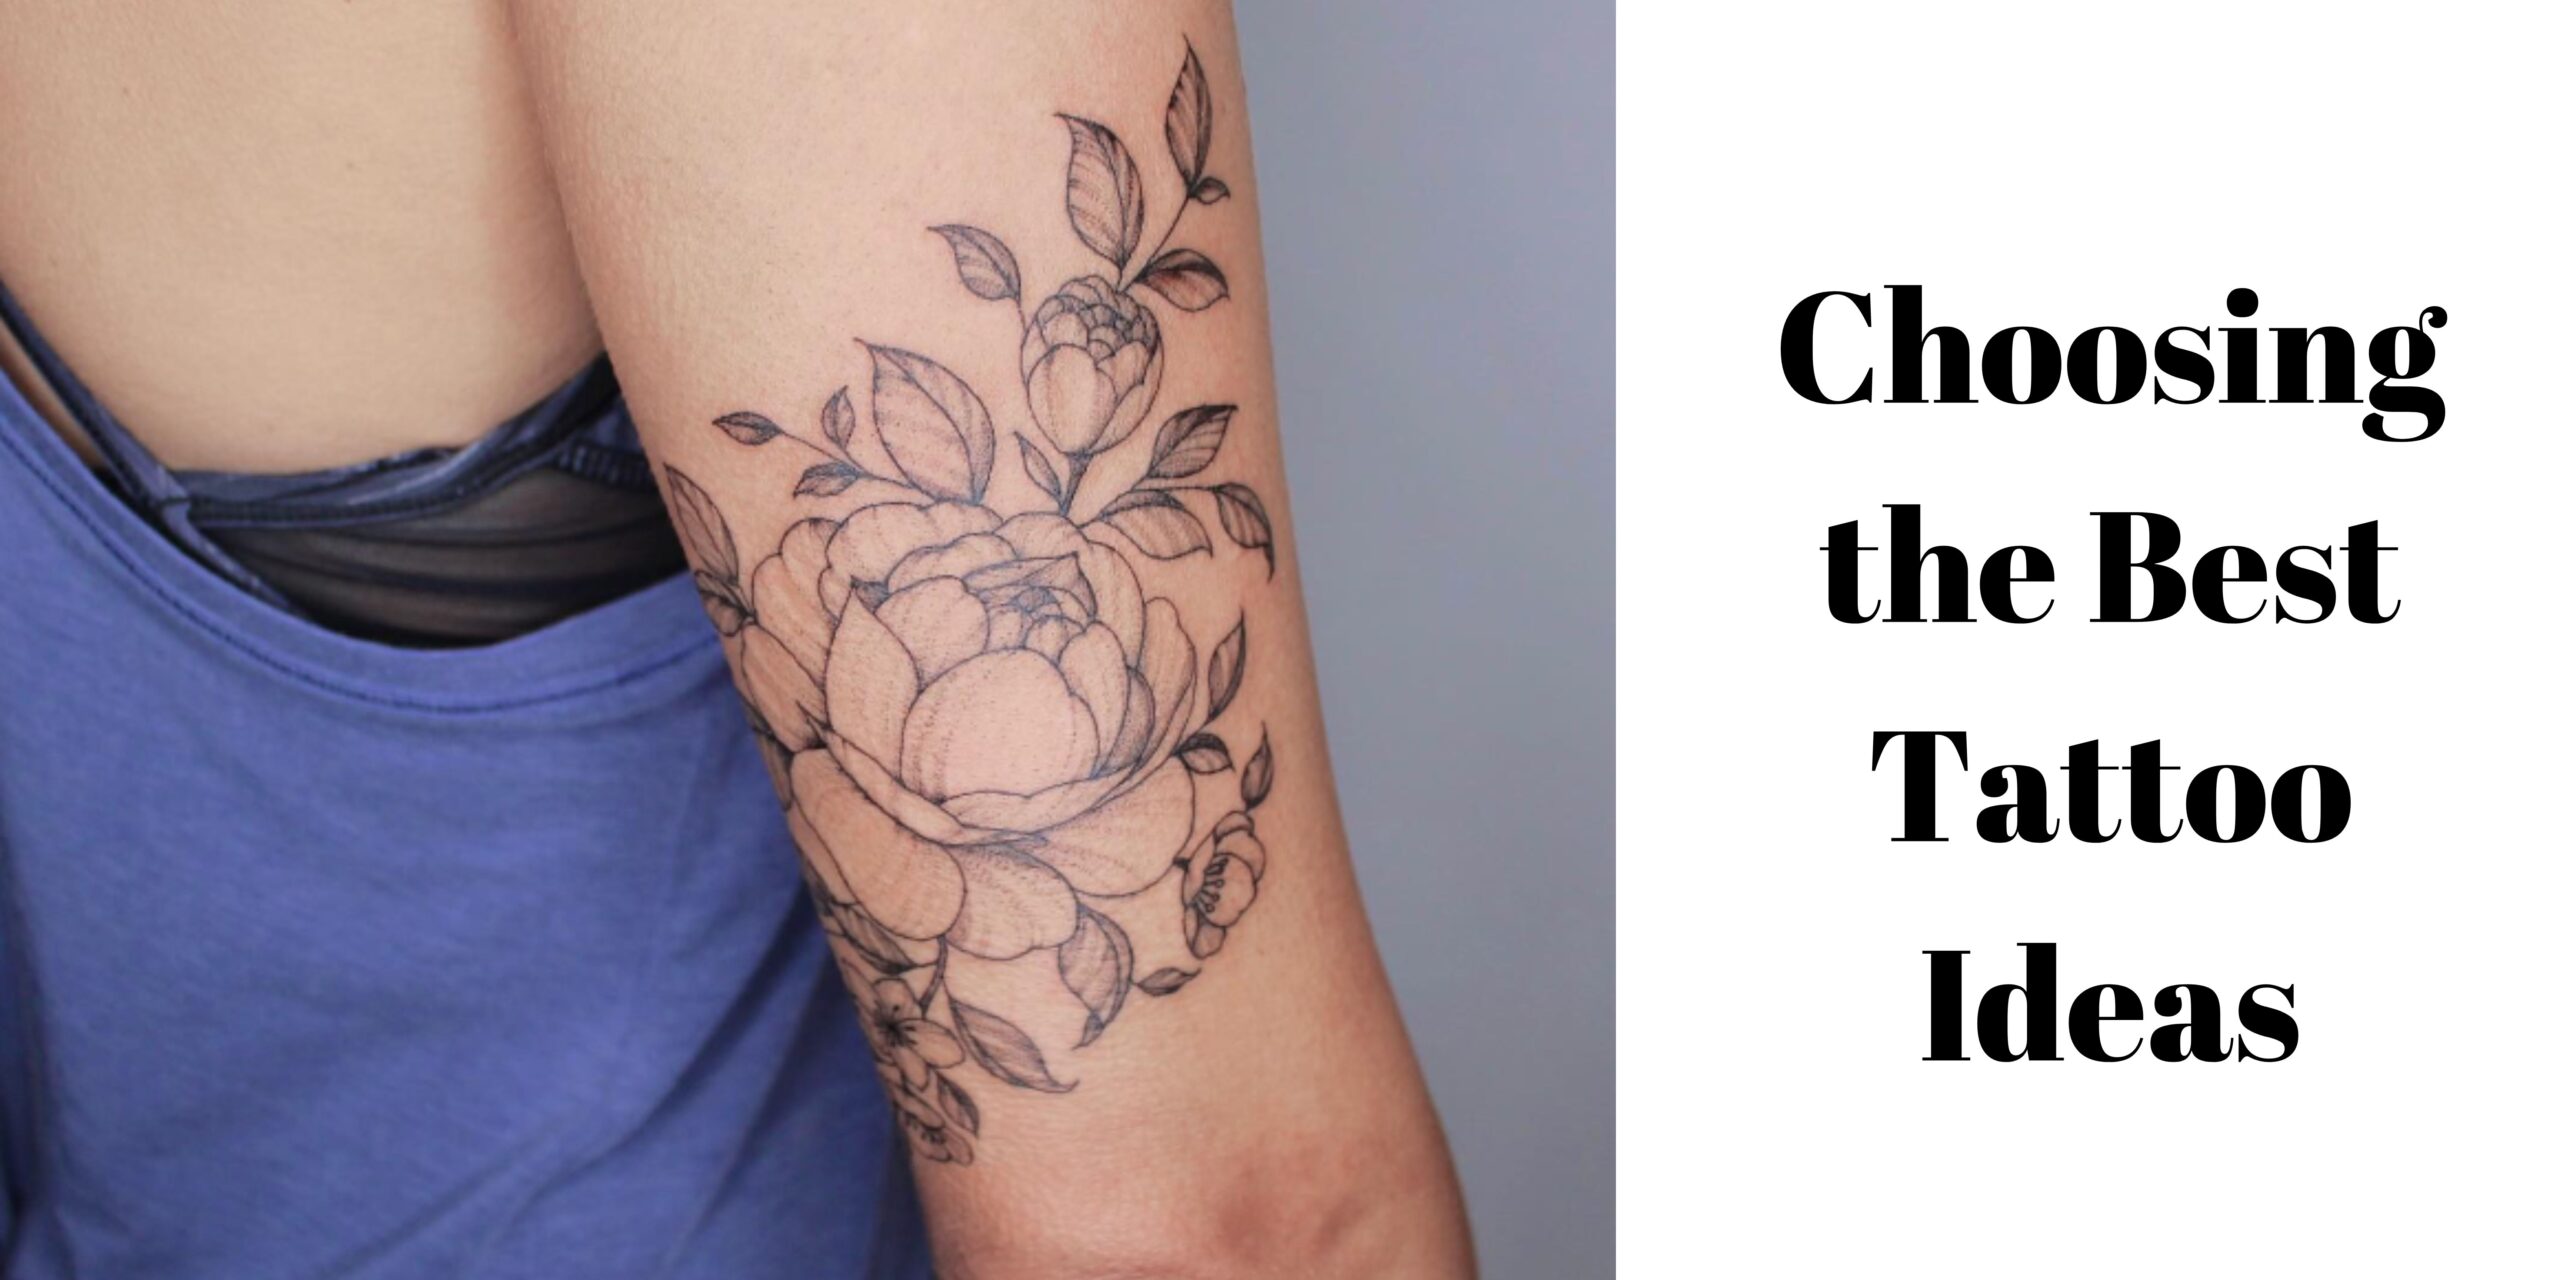 Share more than 61 lumineers tattoo ideas best - in.eteachers